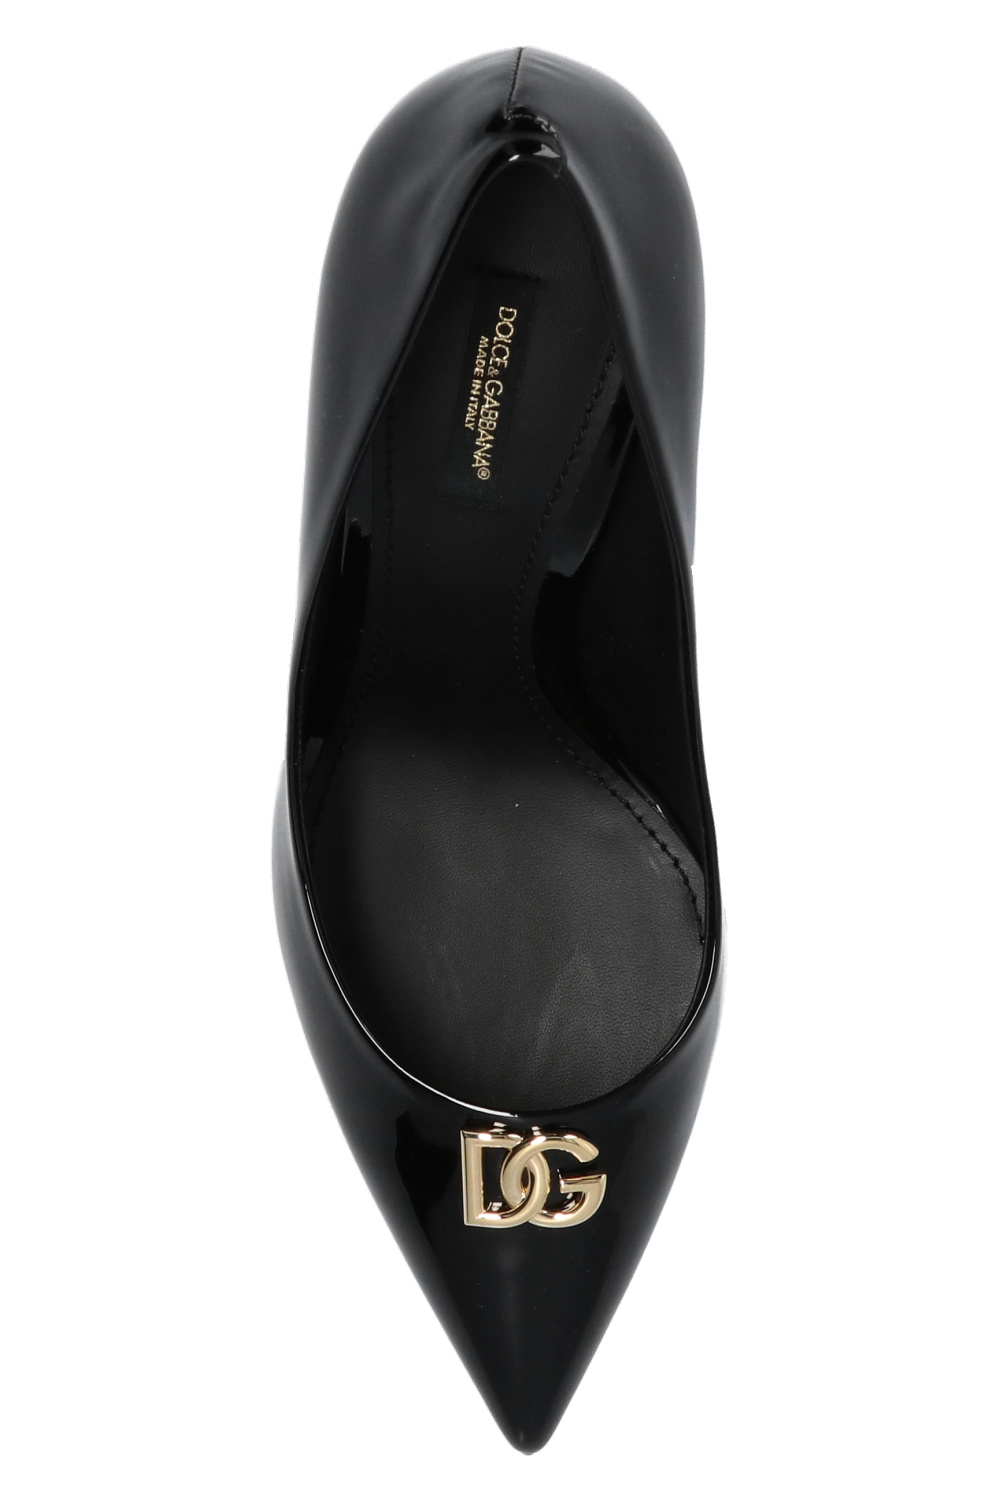 Dolce & Gabbana Stiletto pumps with logo